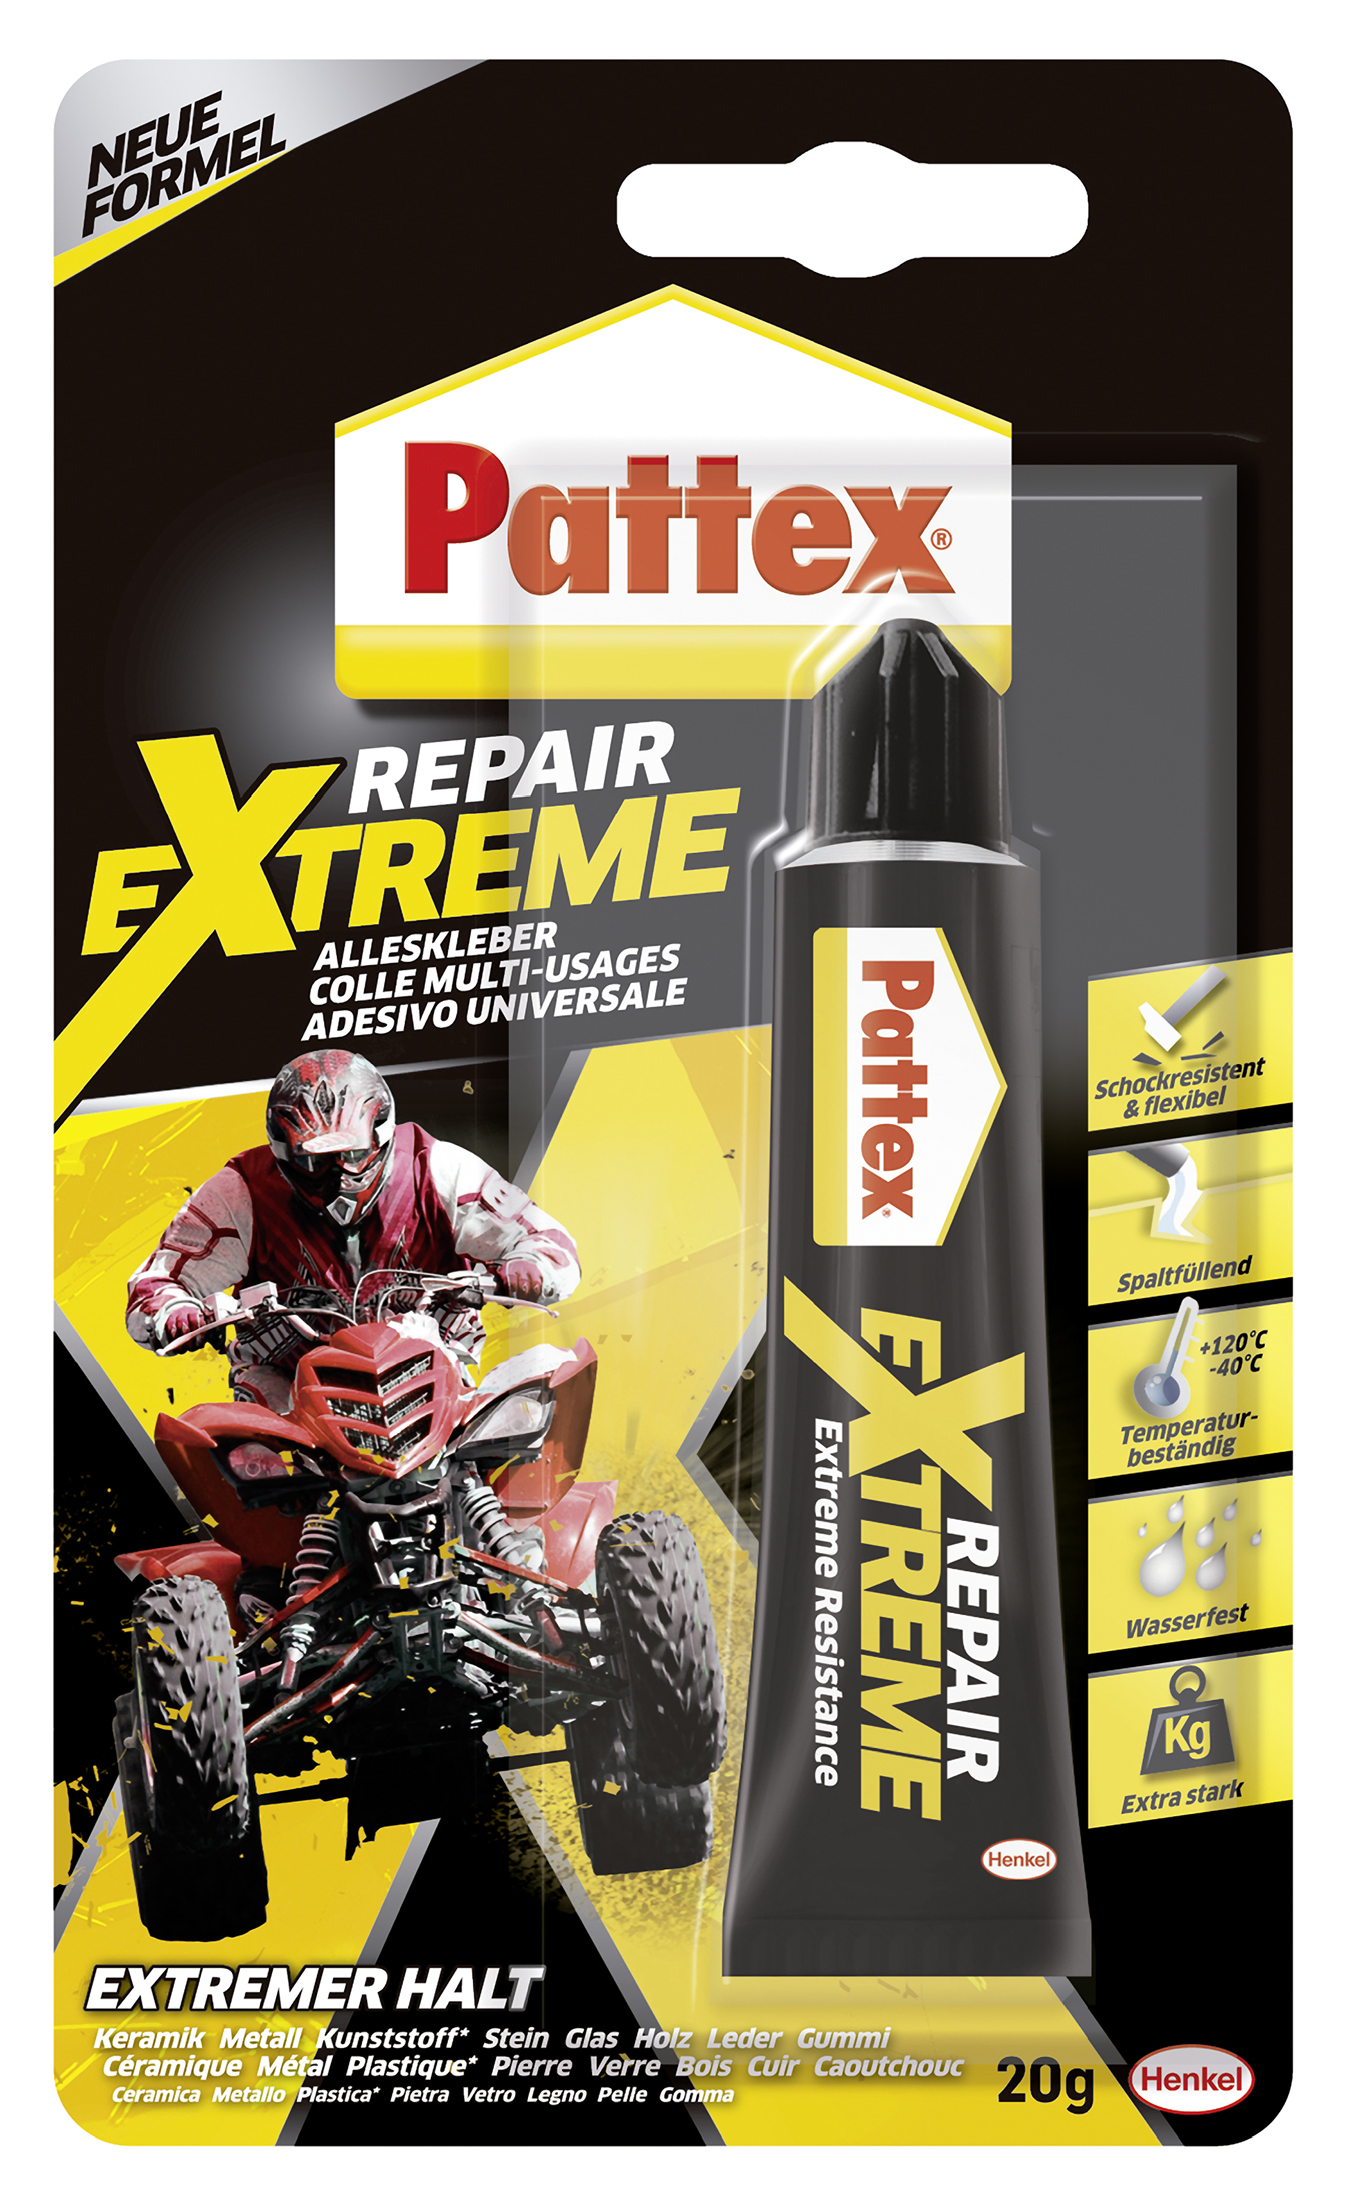 Pattex® Repair Extreme Alleskleber 20 g